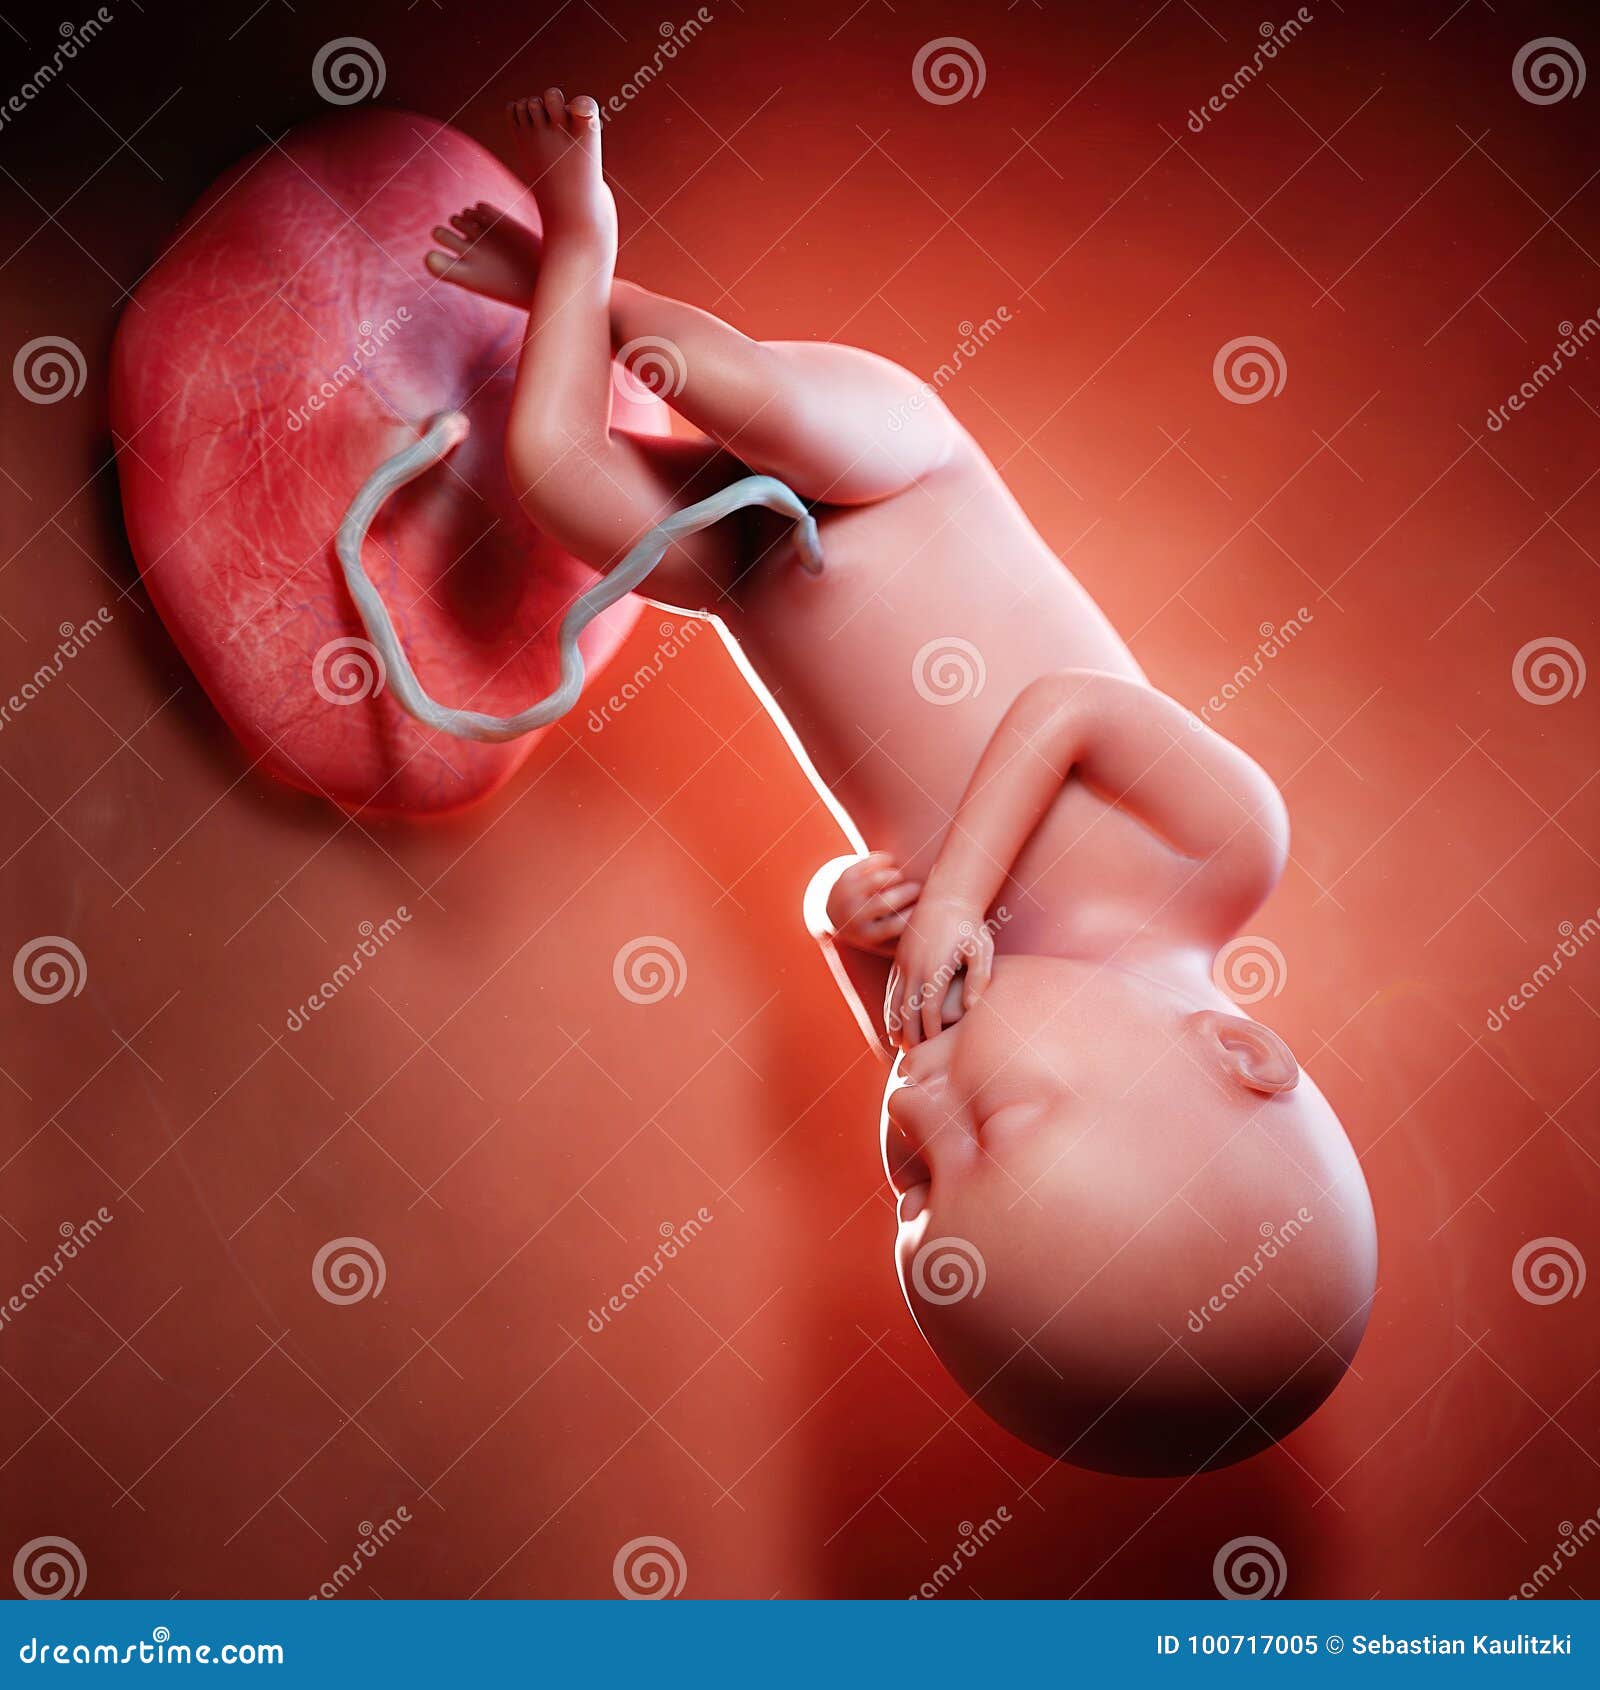 a fetus week 36